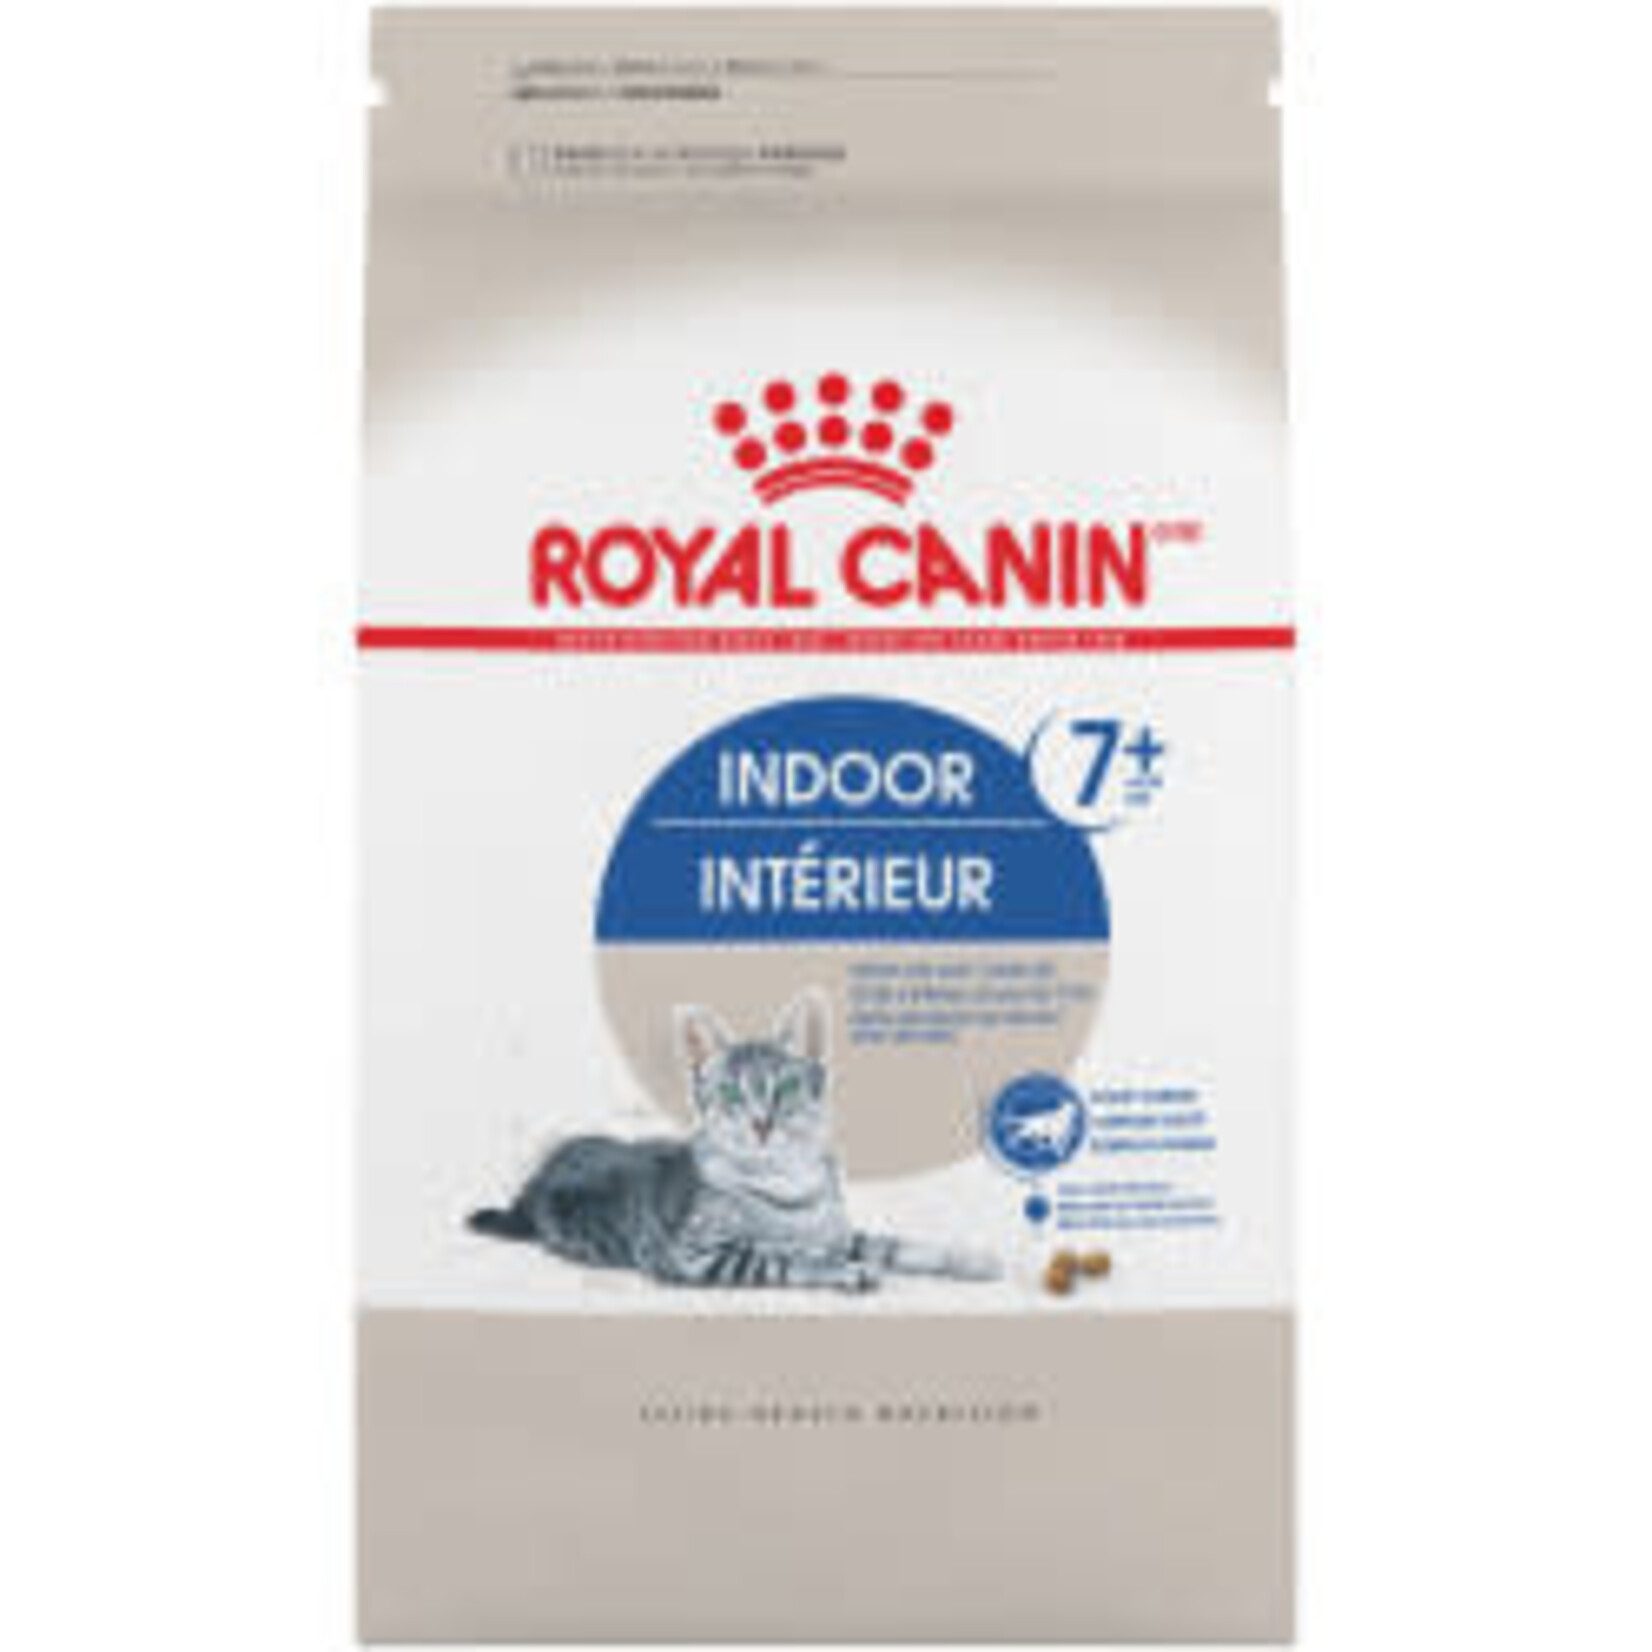 Royal Canin Royal Canin Chat Intérieur 7+ 5.5lb/2.5kg